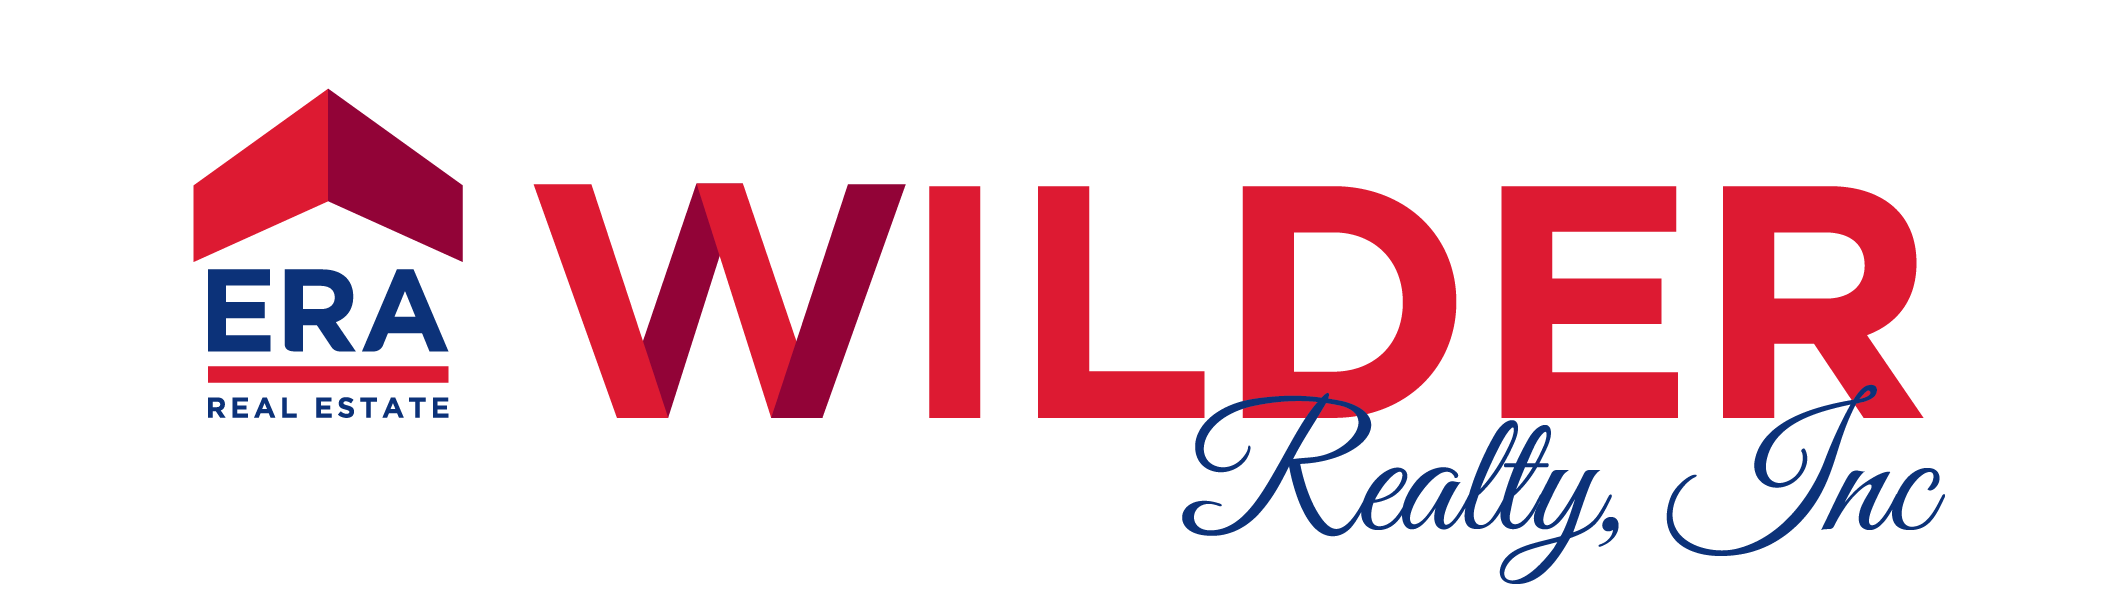 ERA Wilder Realty Logo